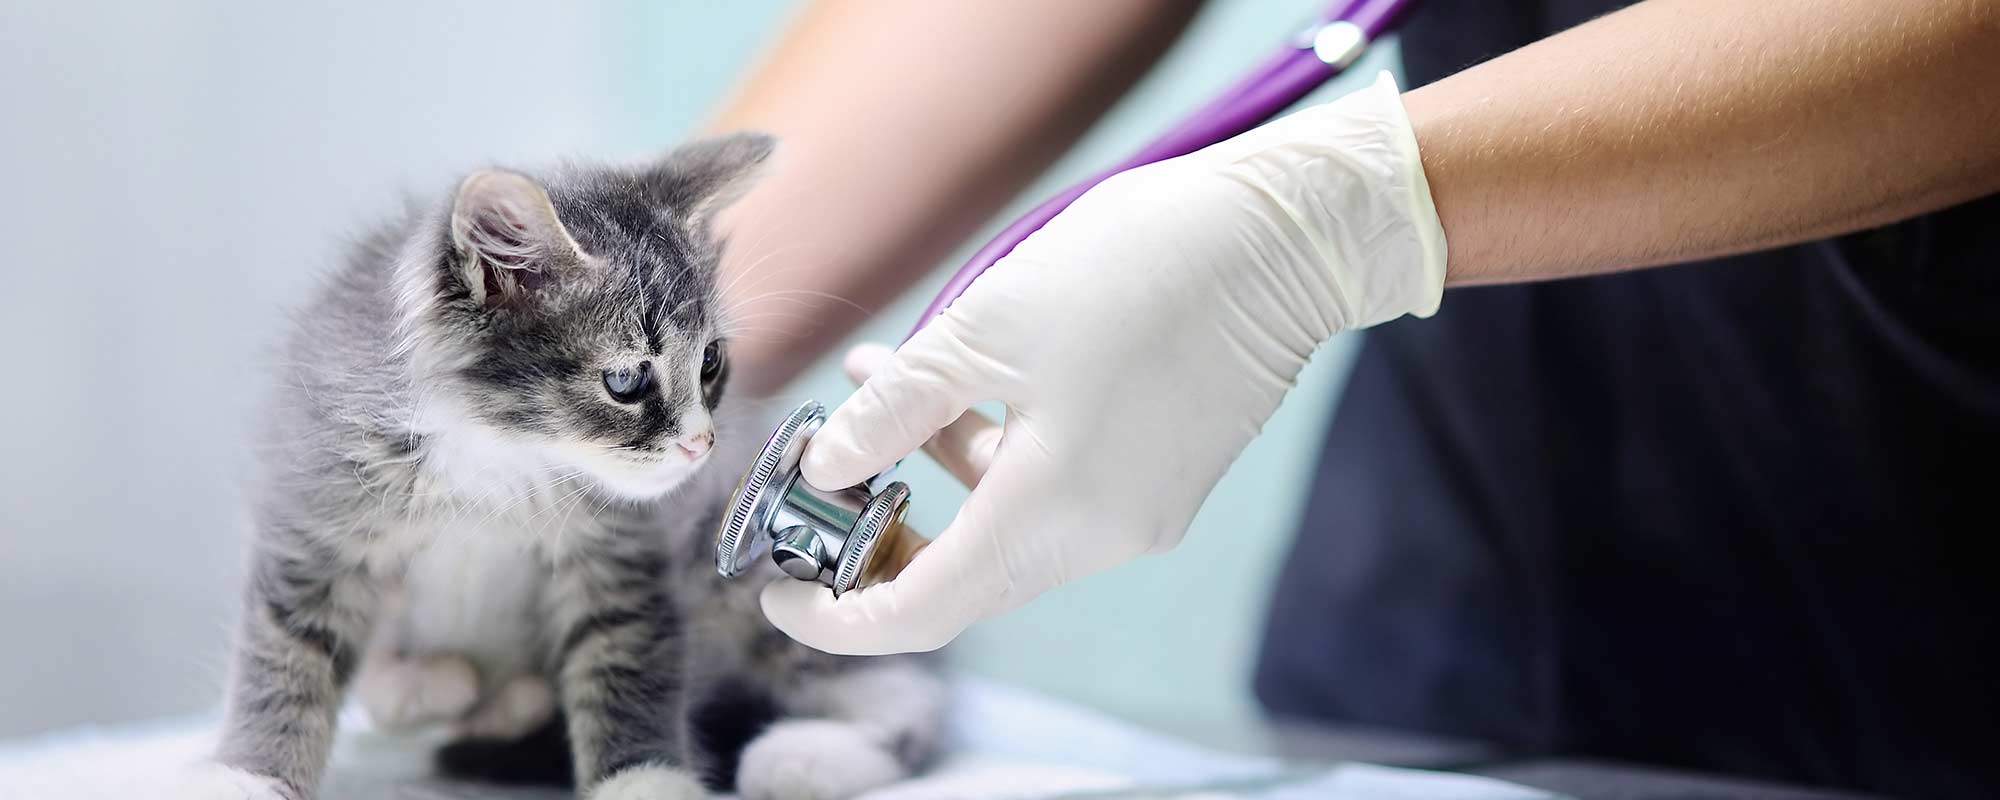 kitten with stethoscope